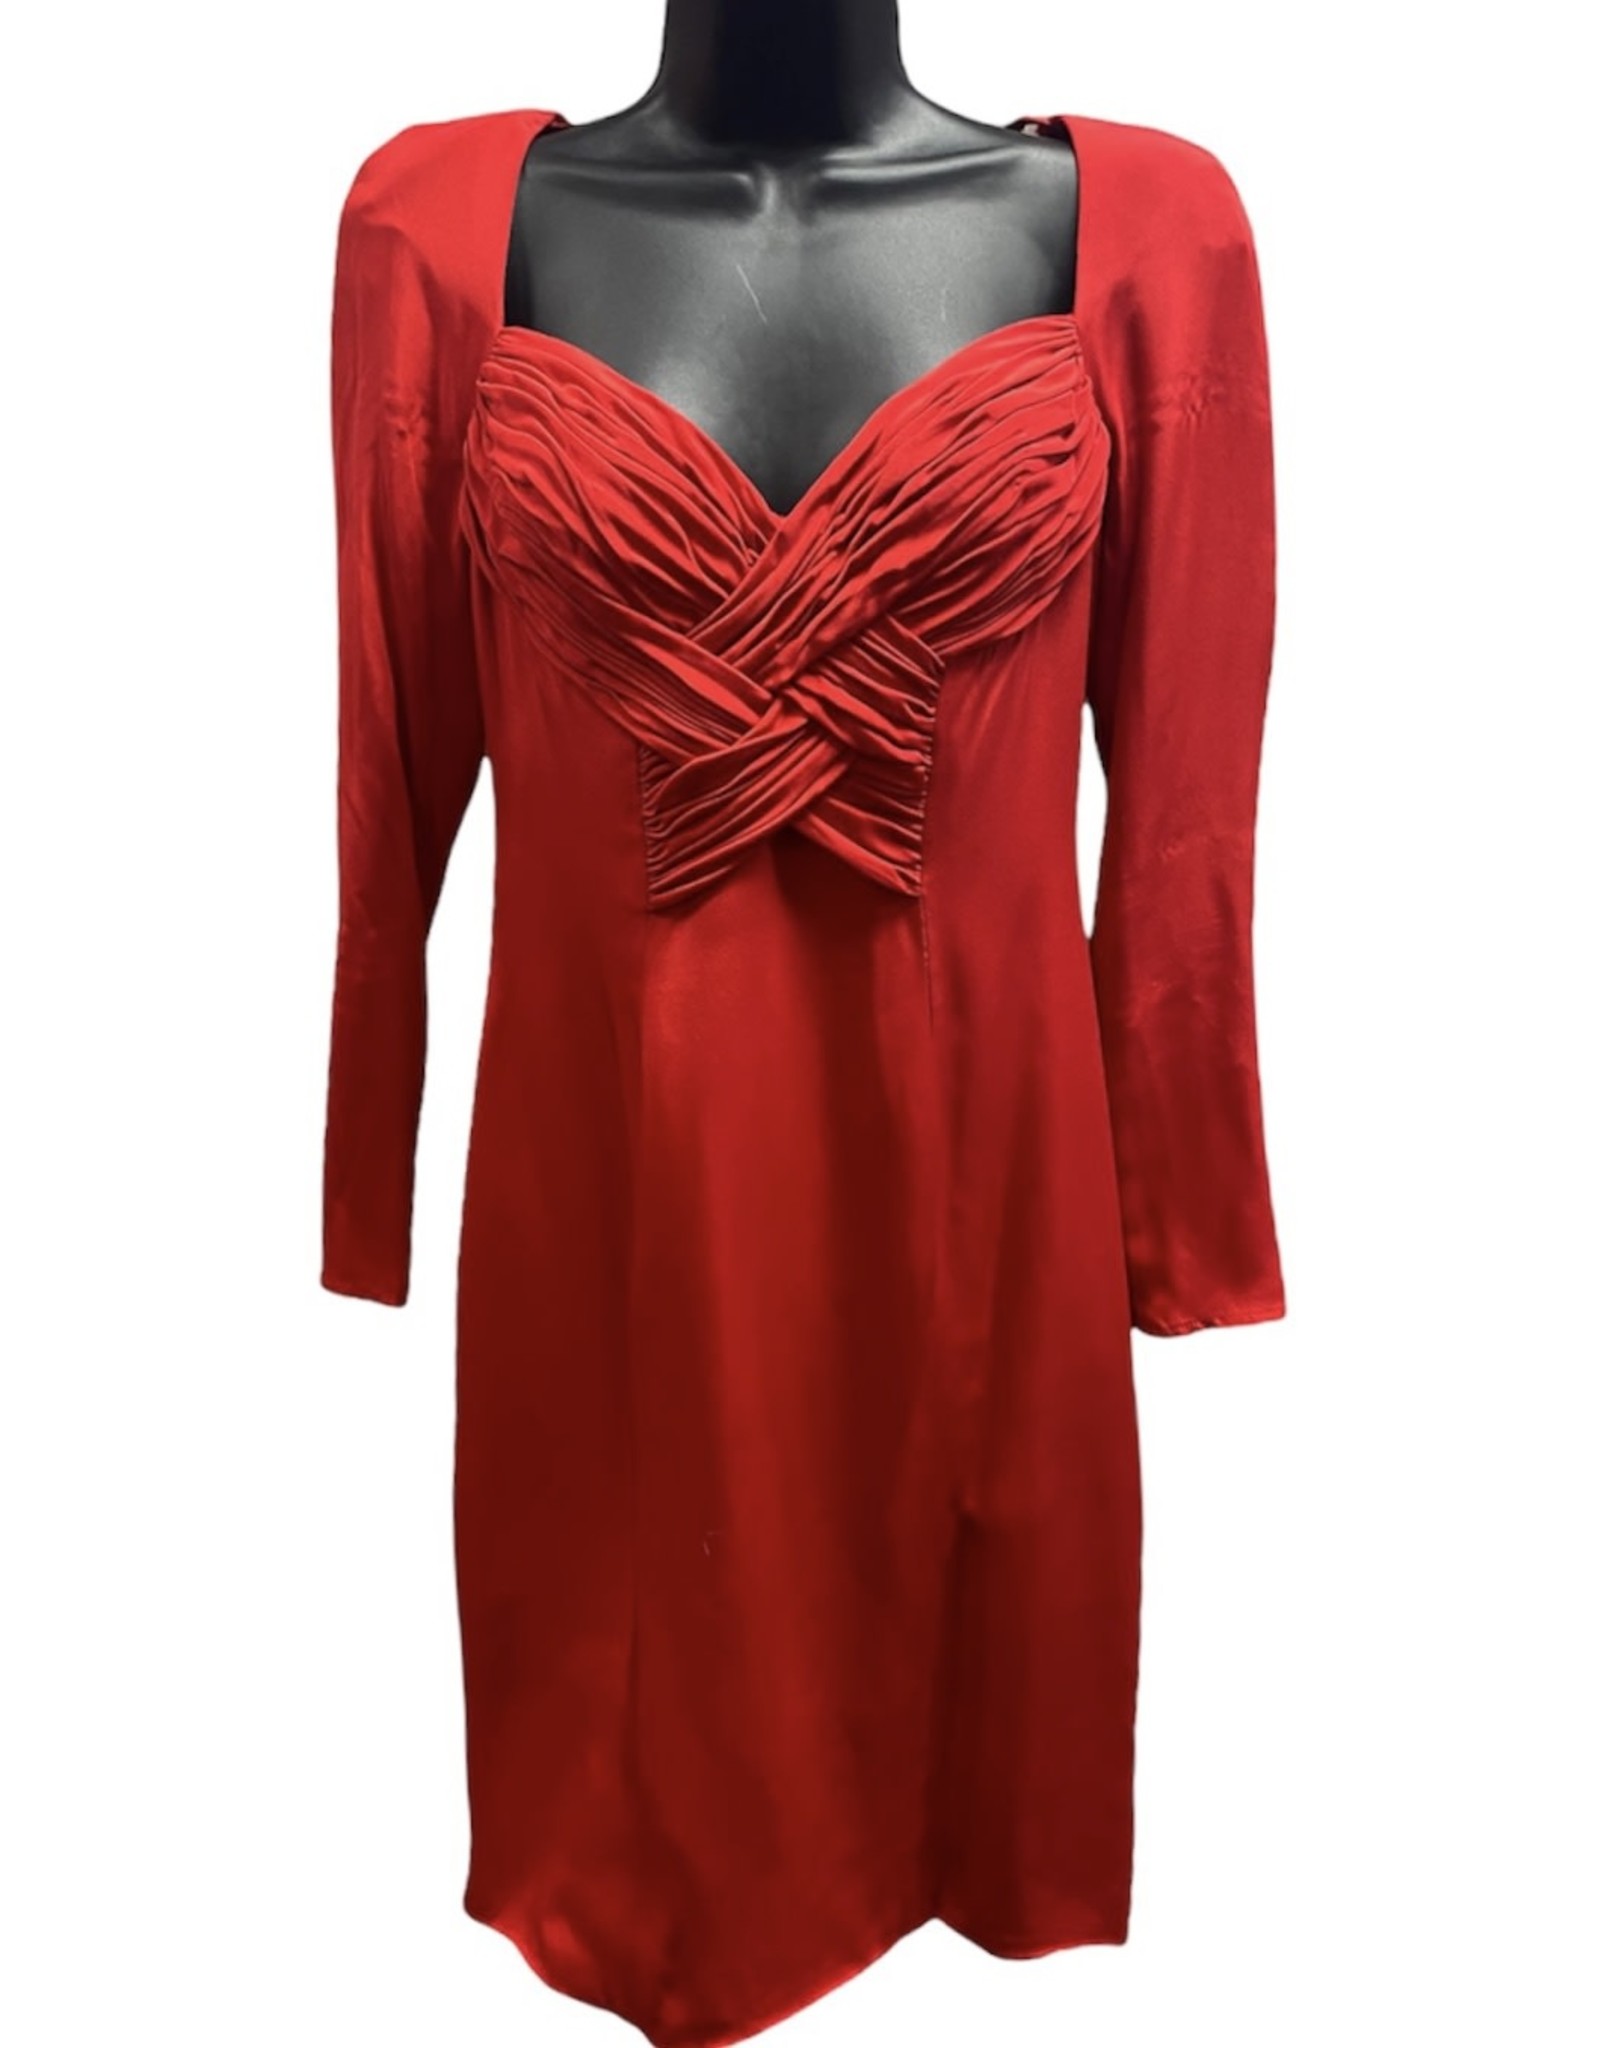 80s red silk dress sz 6